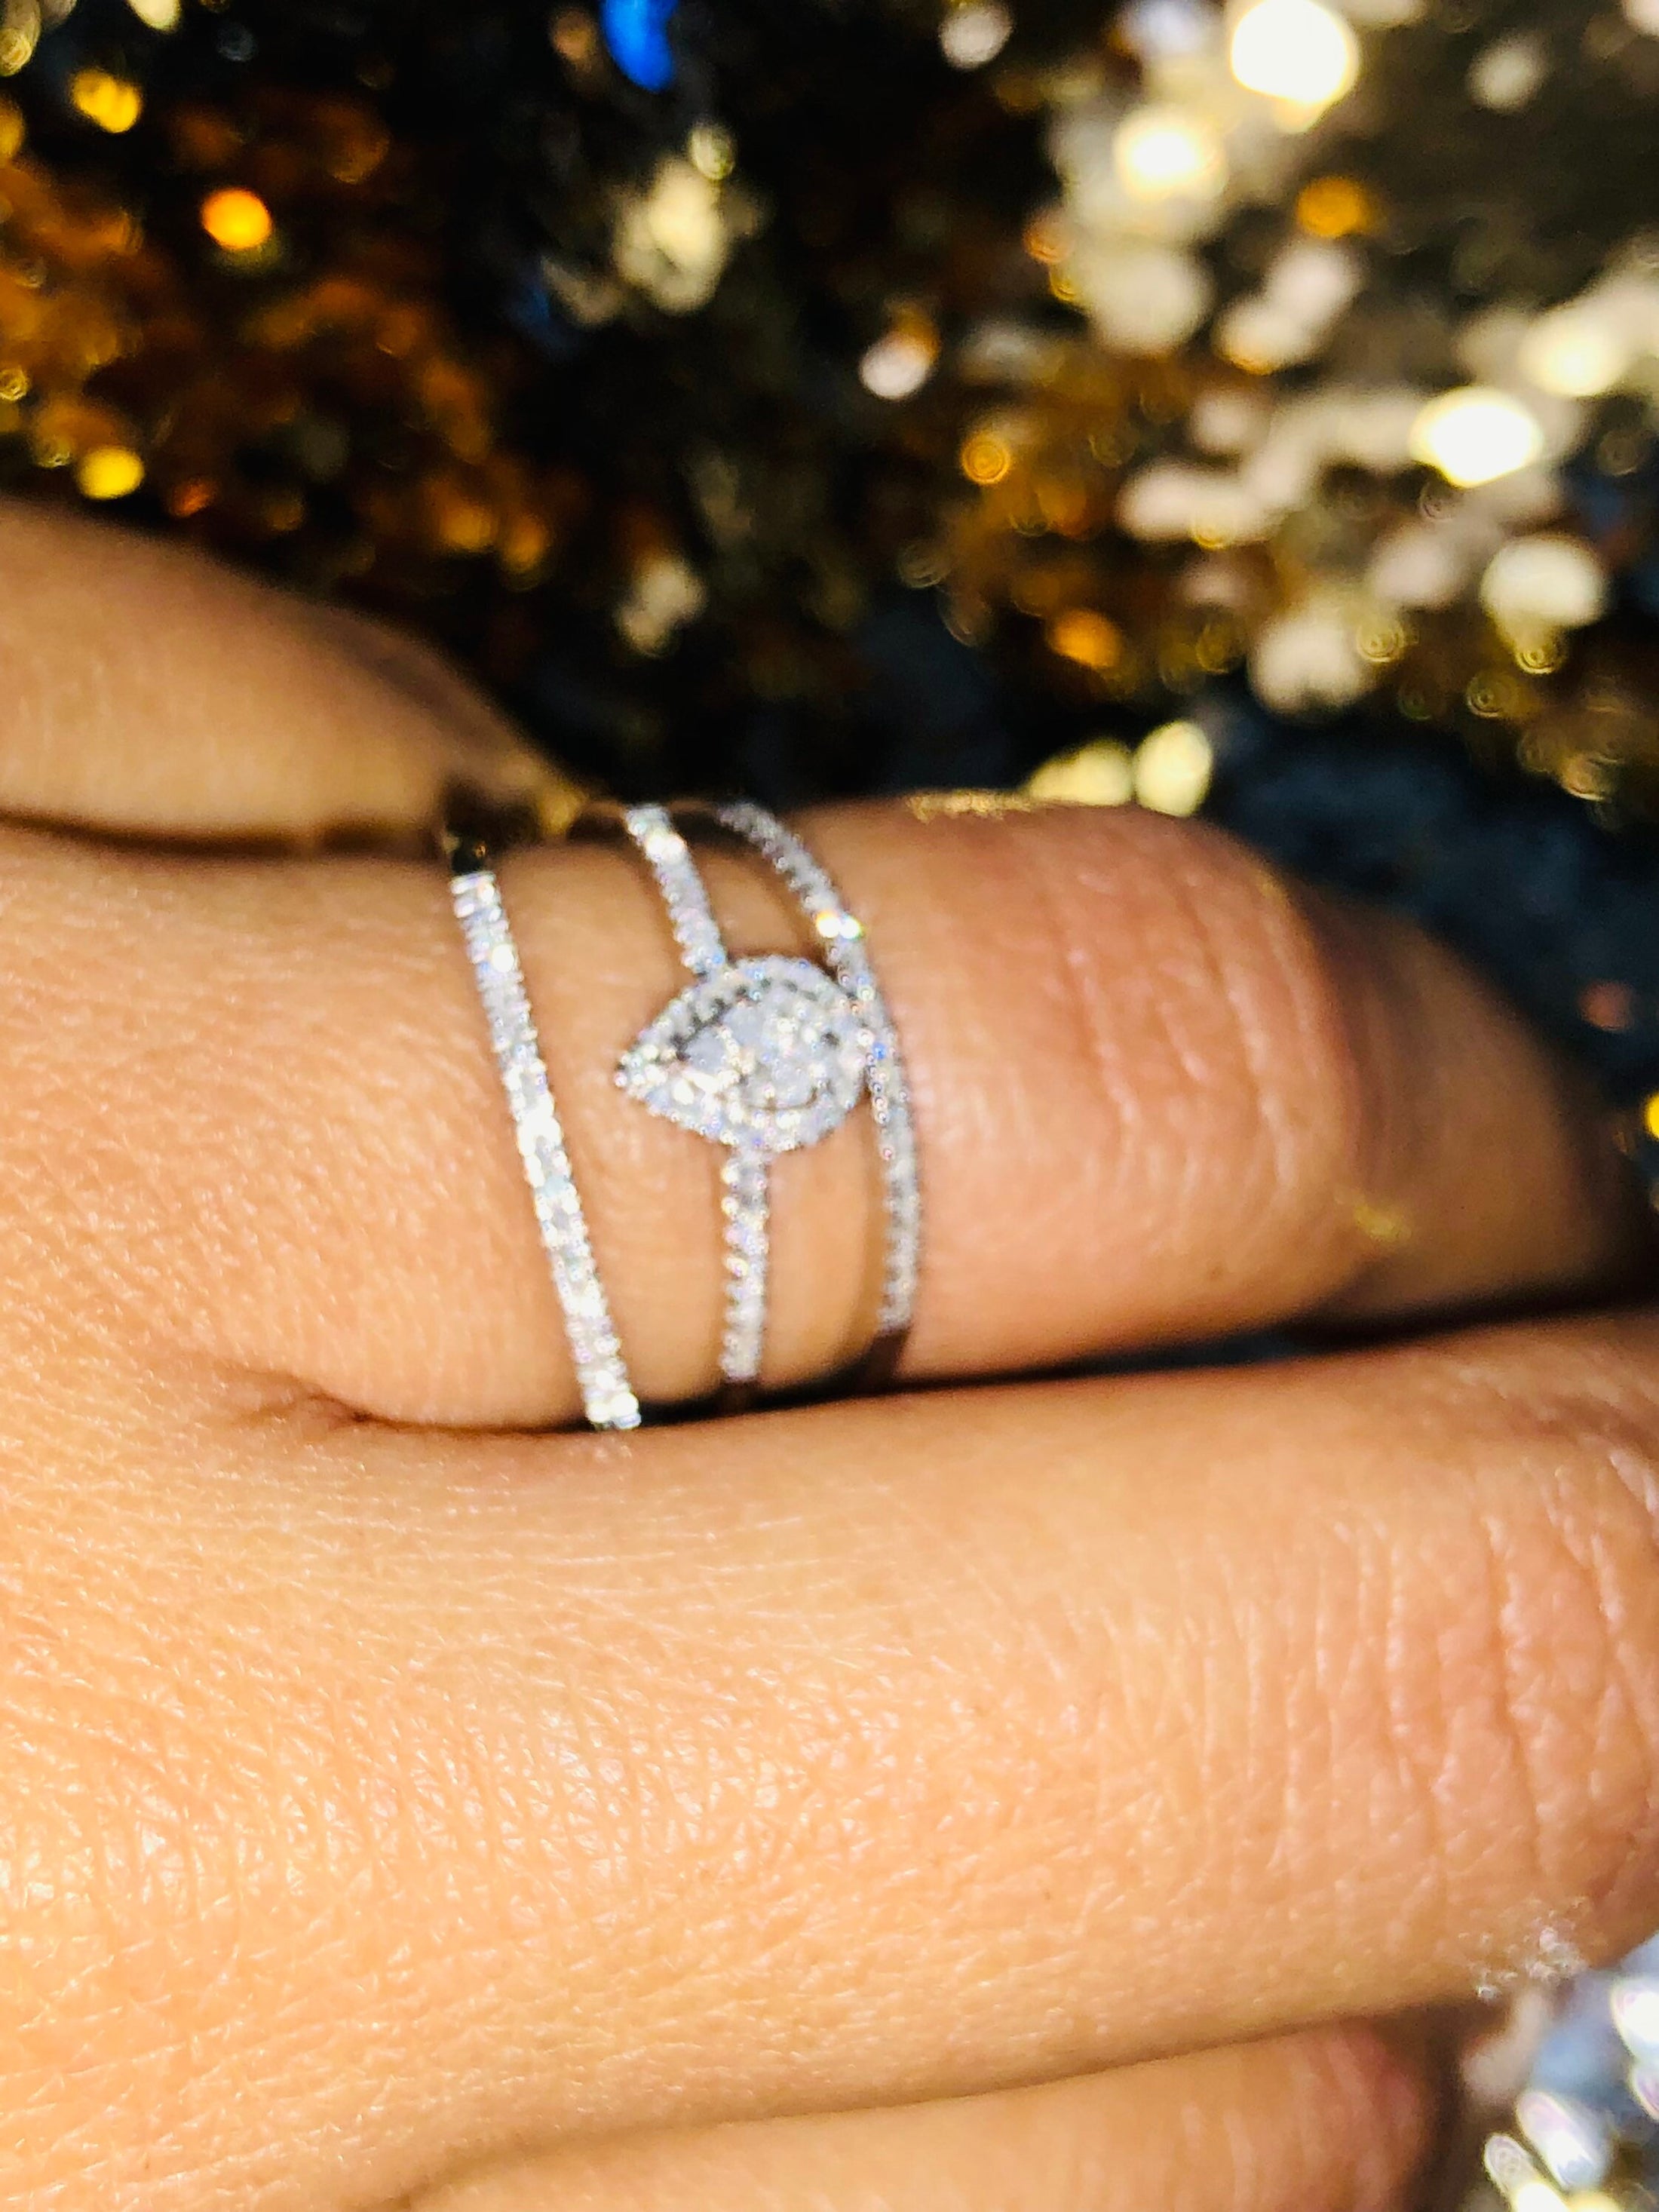 Real diamond bridal engagement ring set so beautifully classy elegant gift 10k white gold vermeil natural diamonds not CZ not moissanite